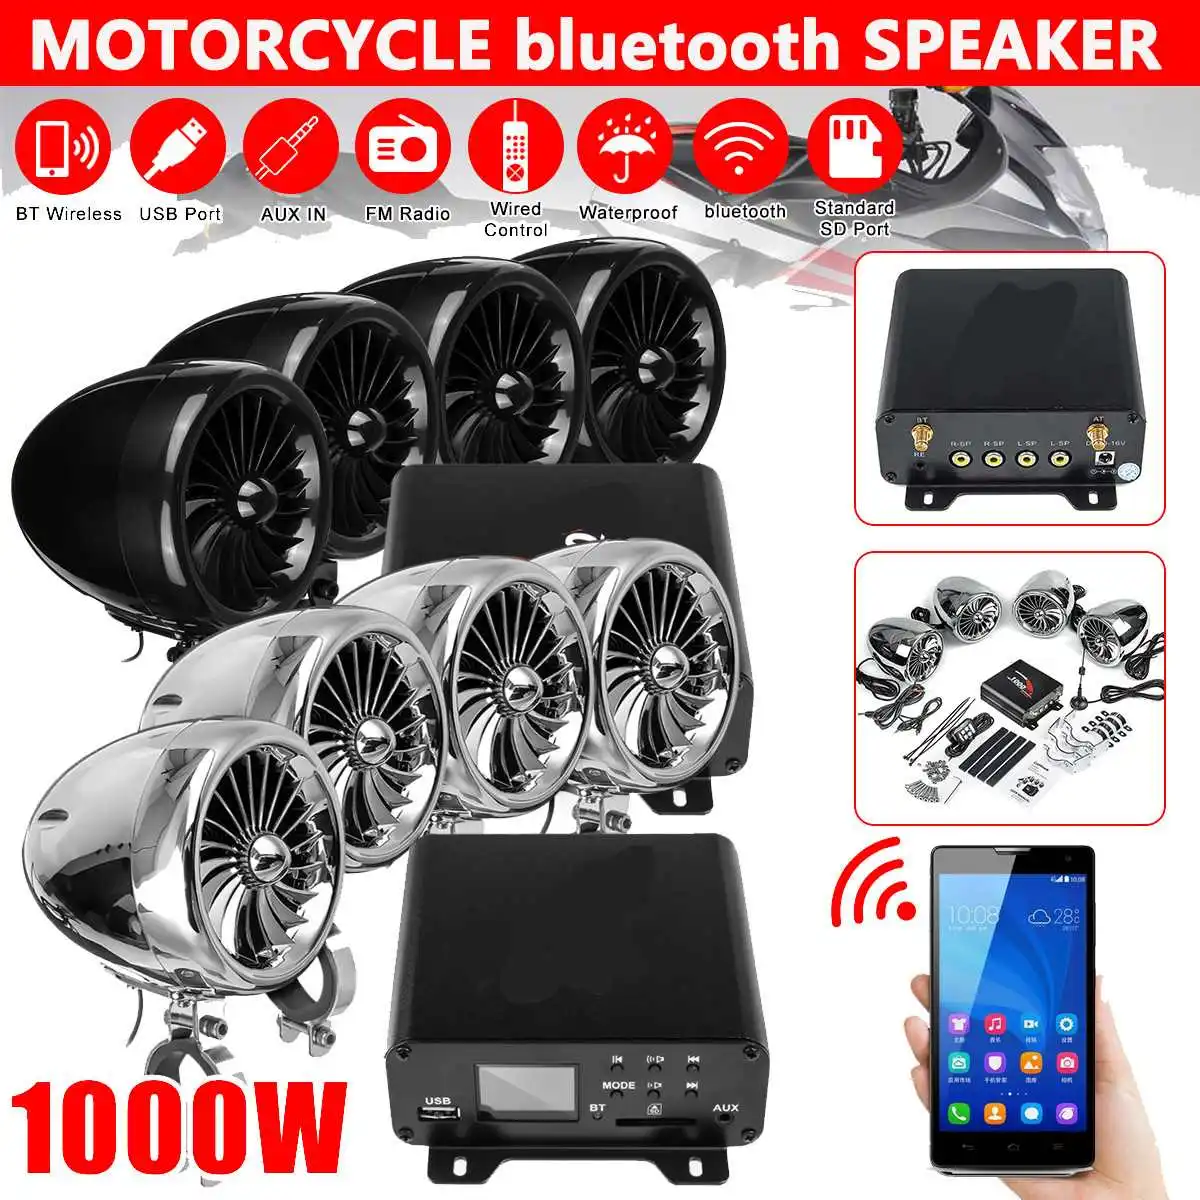 1000W Motorcycle Speaker Bluetooth Amplifier Waterproof Audio Stereo 4 Speaker MP3 FM Radio System for Motorcycles/ATV/UTV/Boat 